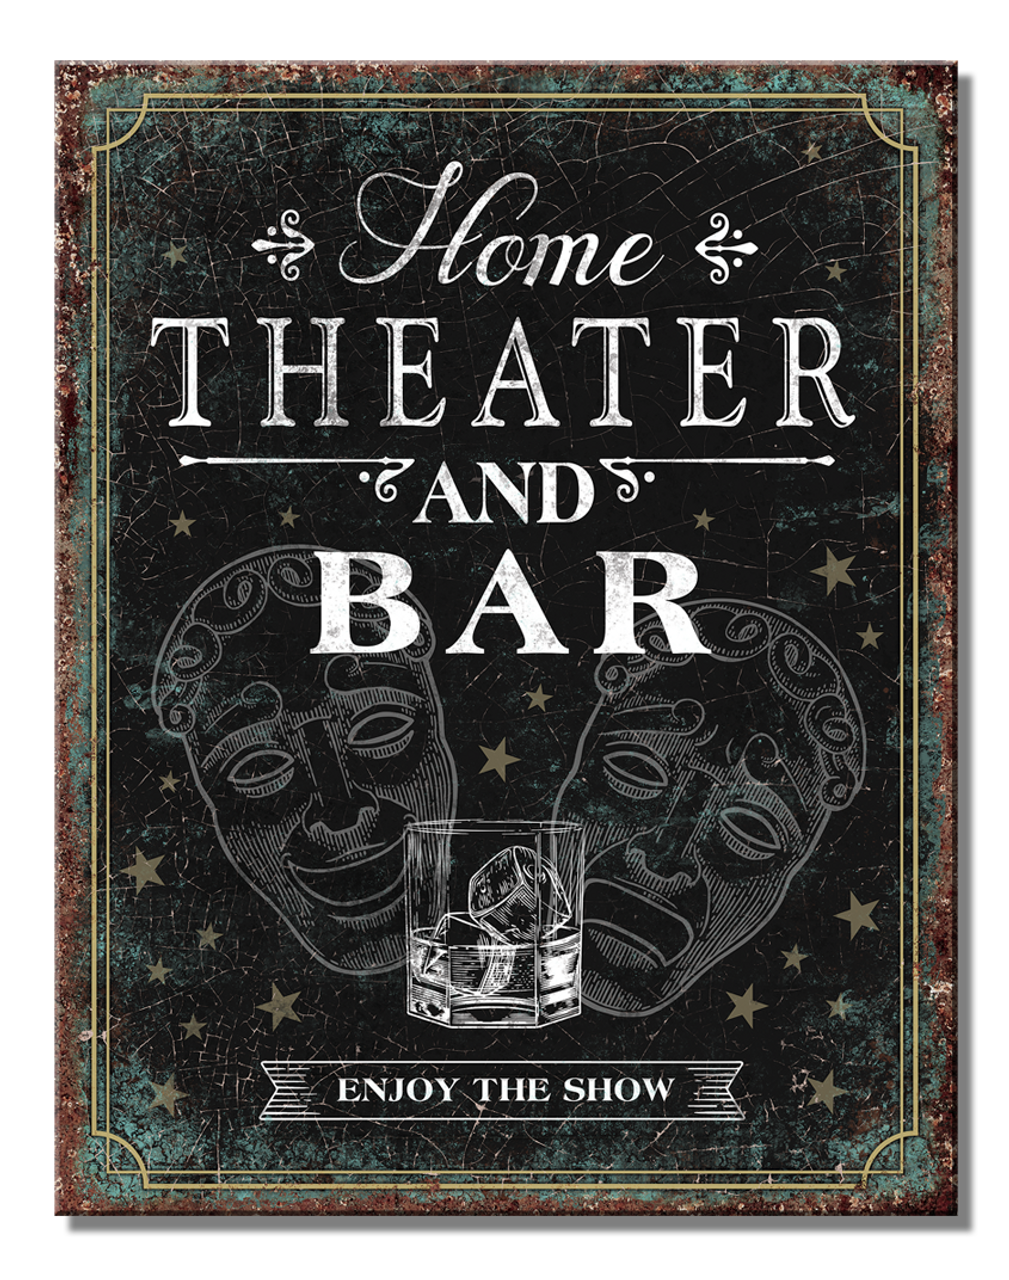  Home Theatre Bar 